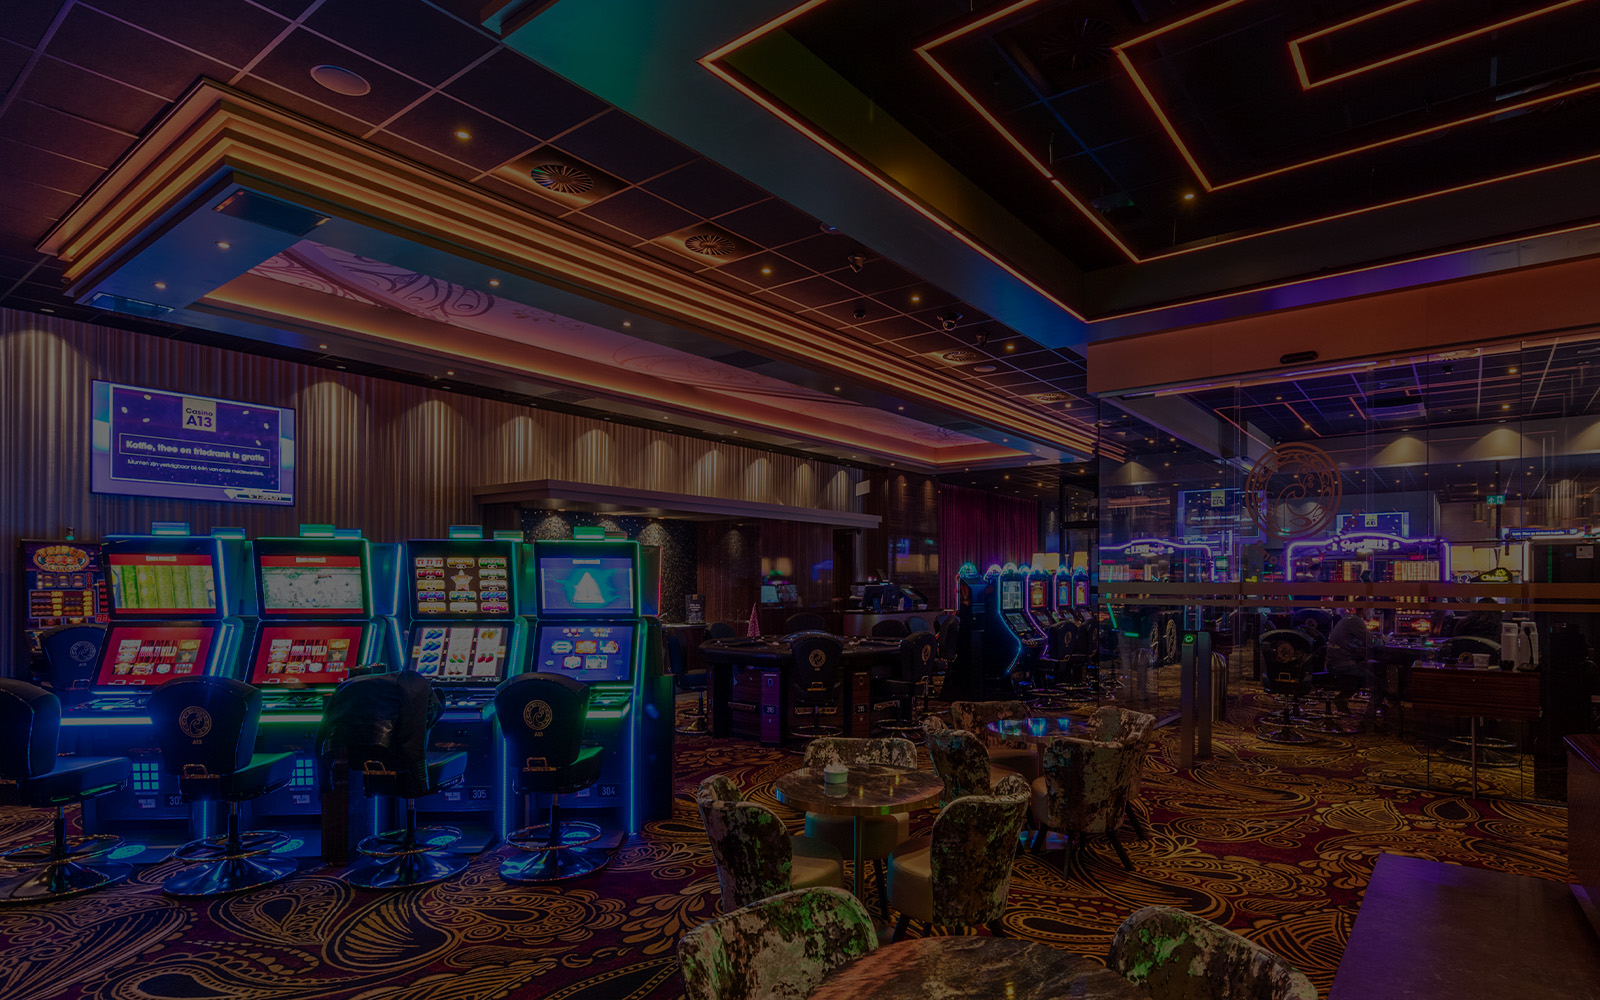 The Palace Group Casinos